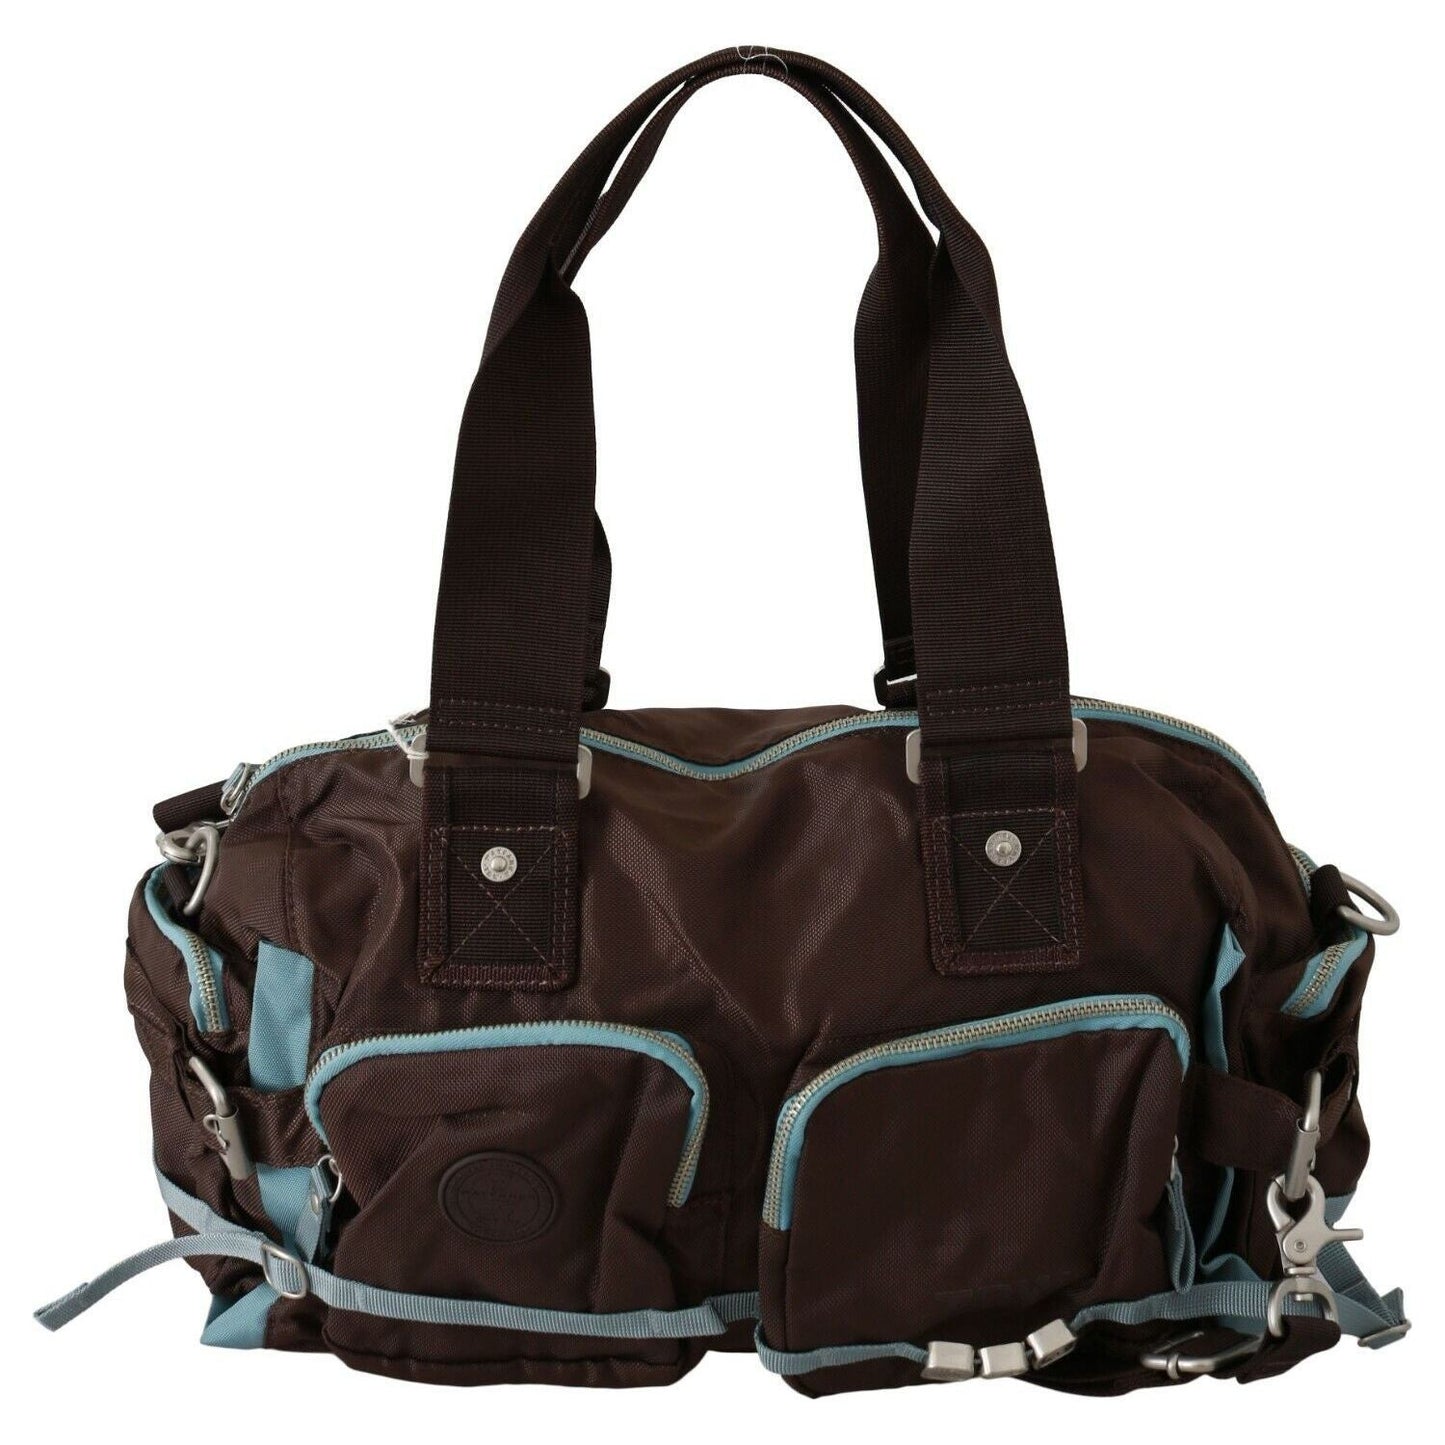 WAYFARER Elegant Duffel Travel Bag in Earthy Brown brown-handbag-duffel-travel-purse Luggage s-l1600-15-1-732e5e16-c05.jpg